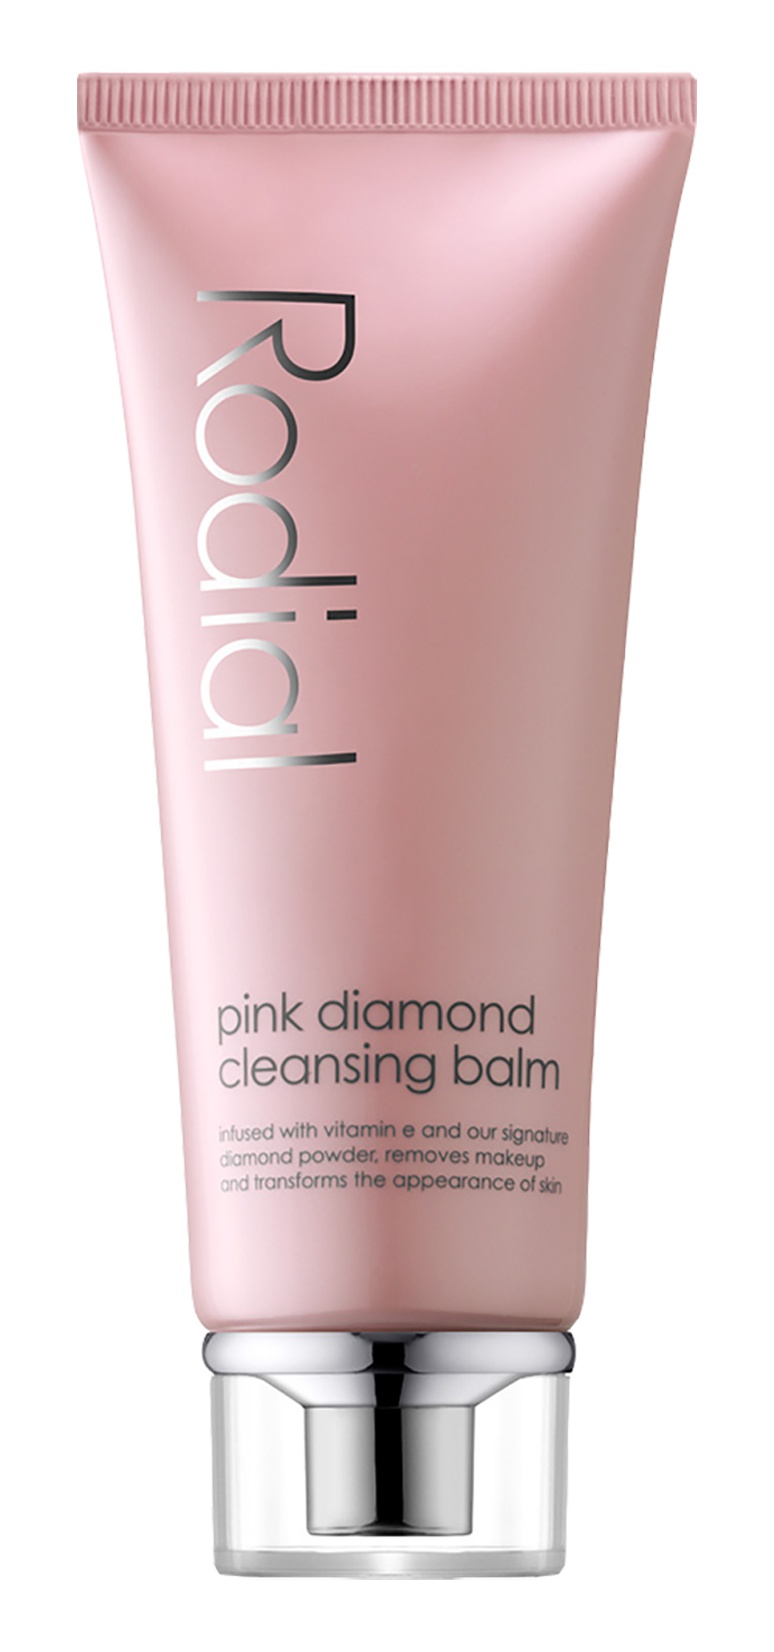 Rodial Pink Diamond Cleansing Balm